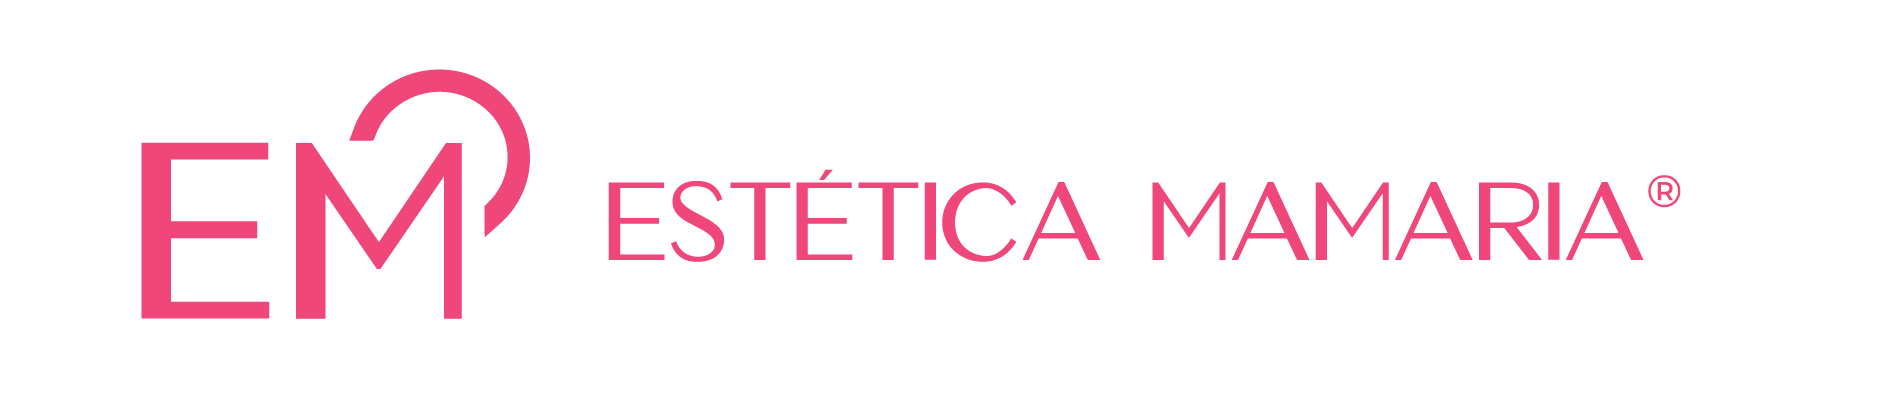 Estética Mamaria logo